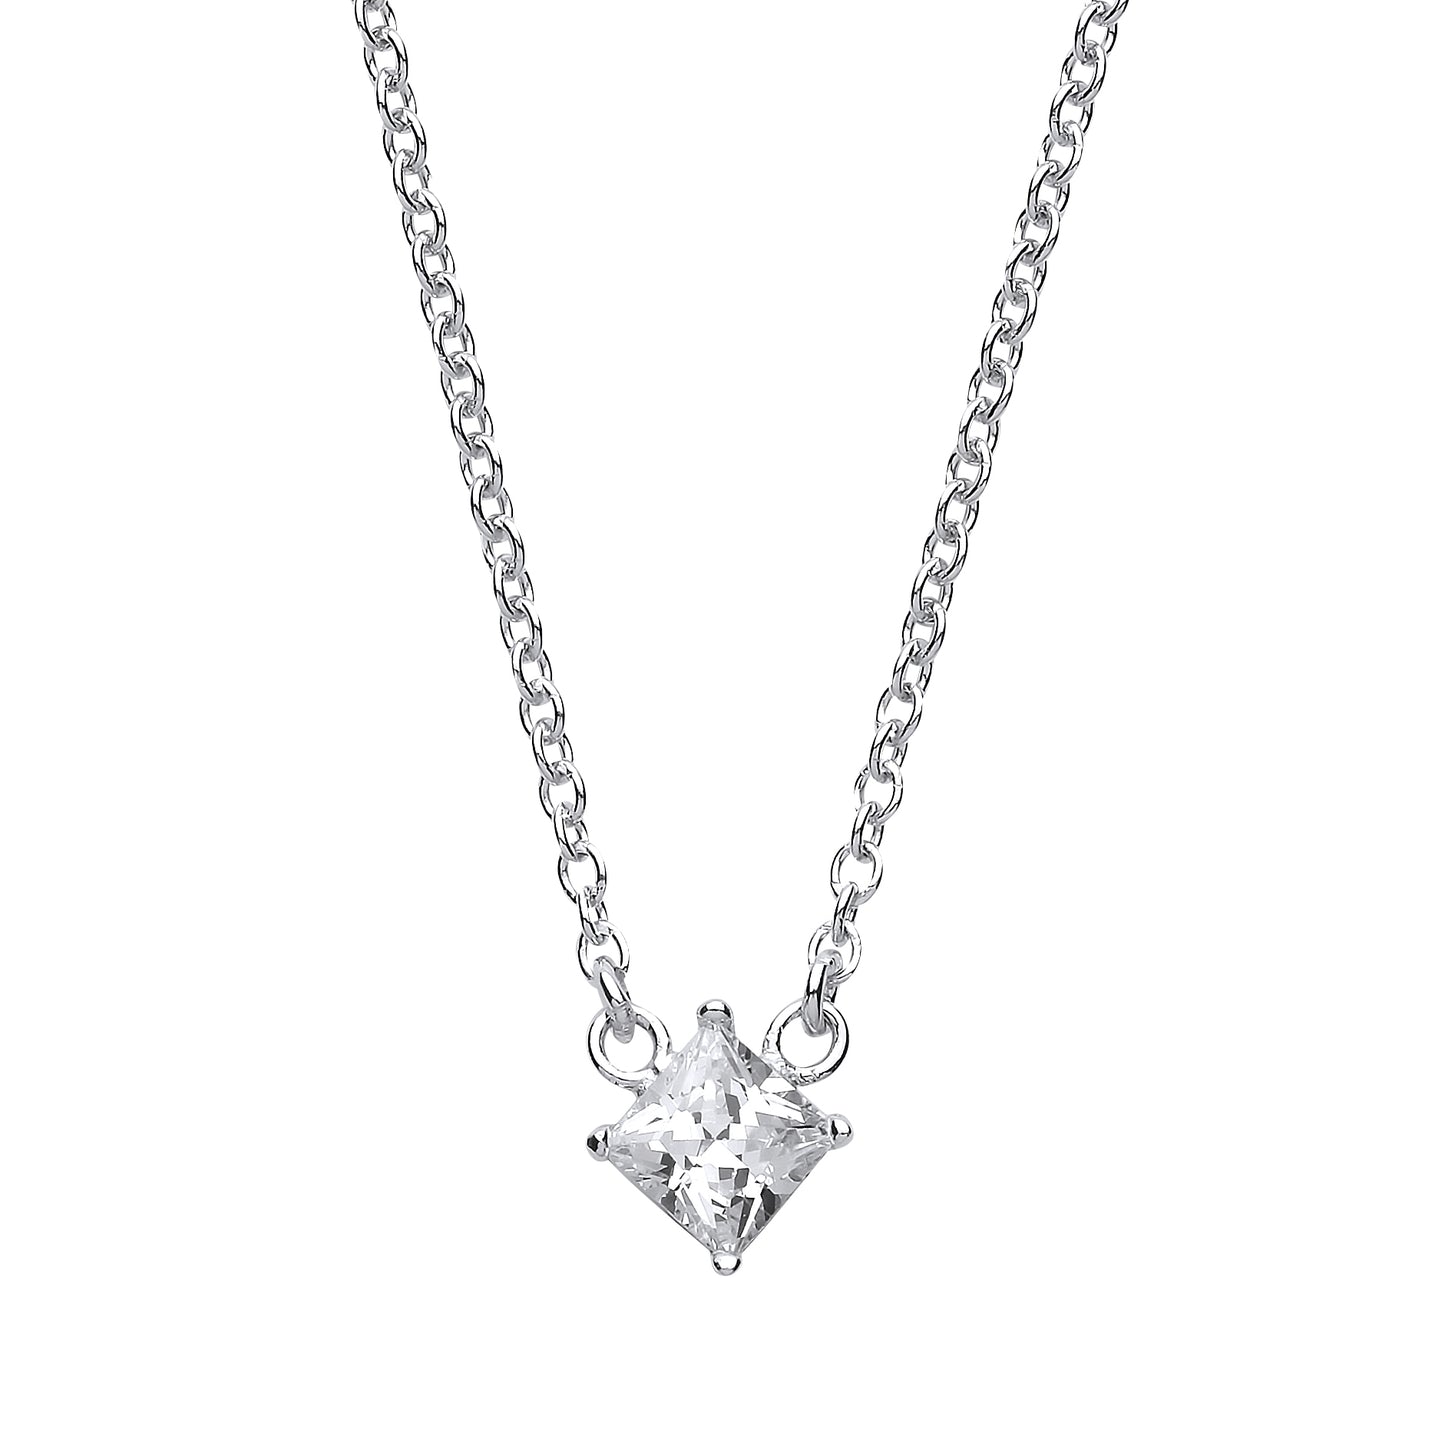 Silver  princess Cut CZ Solitaire Charm Necklace 16 + 2 inch - GVK154